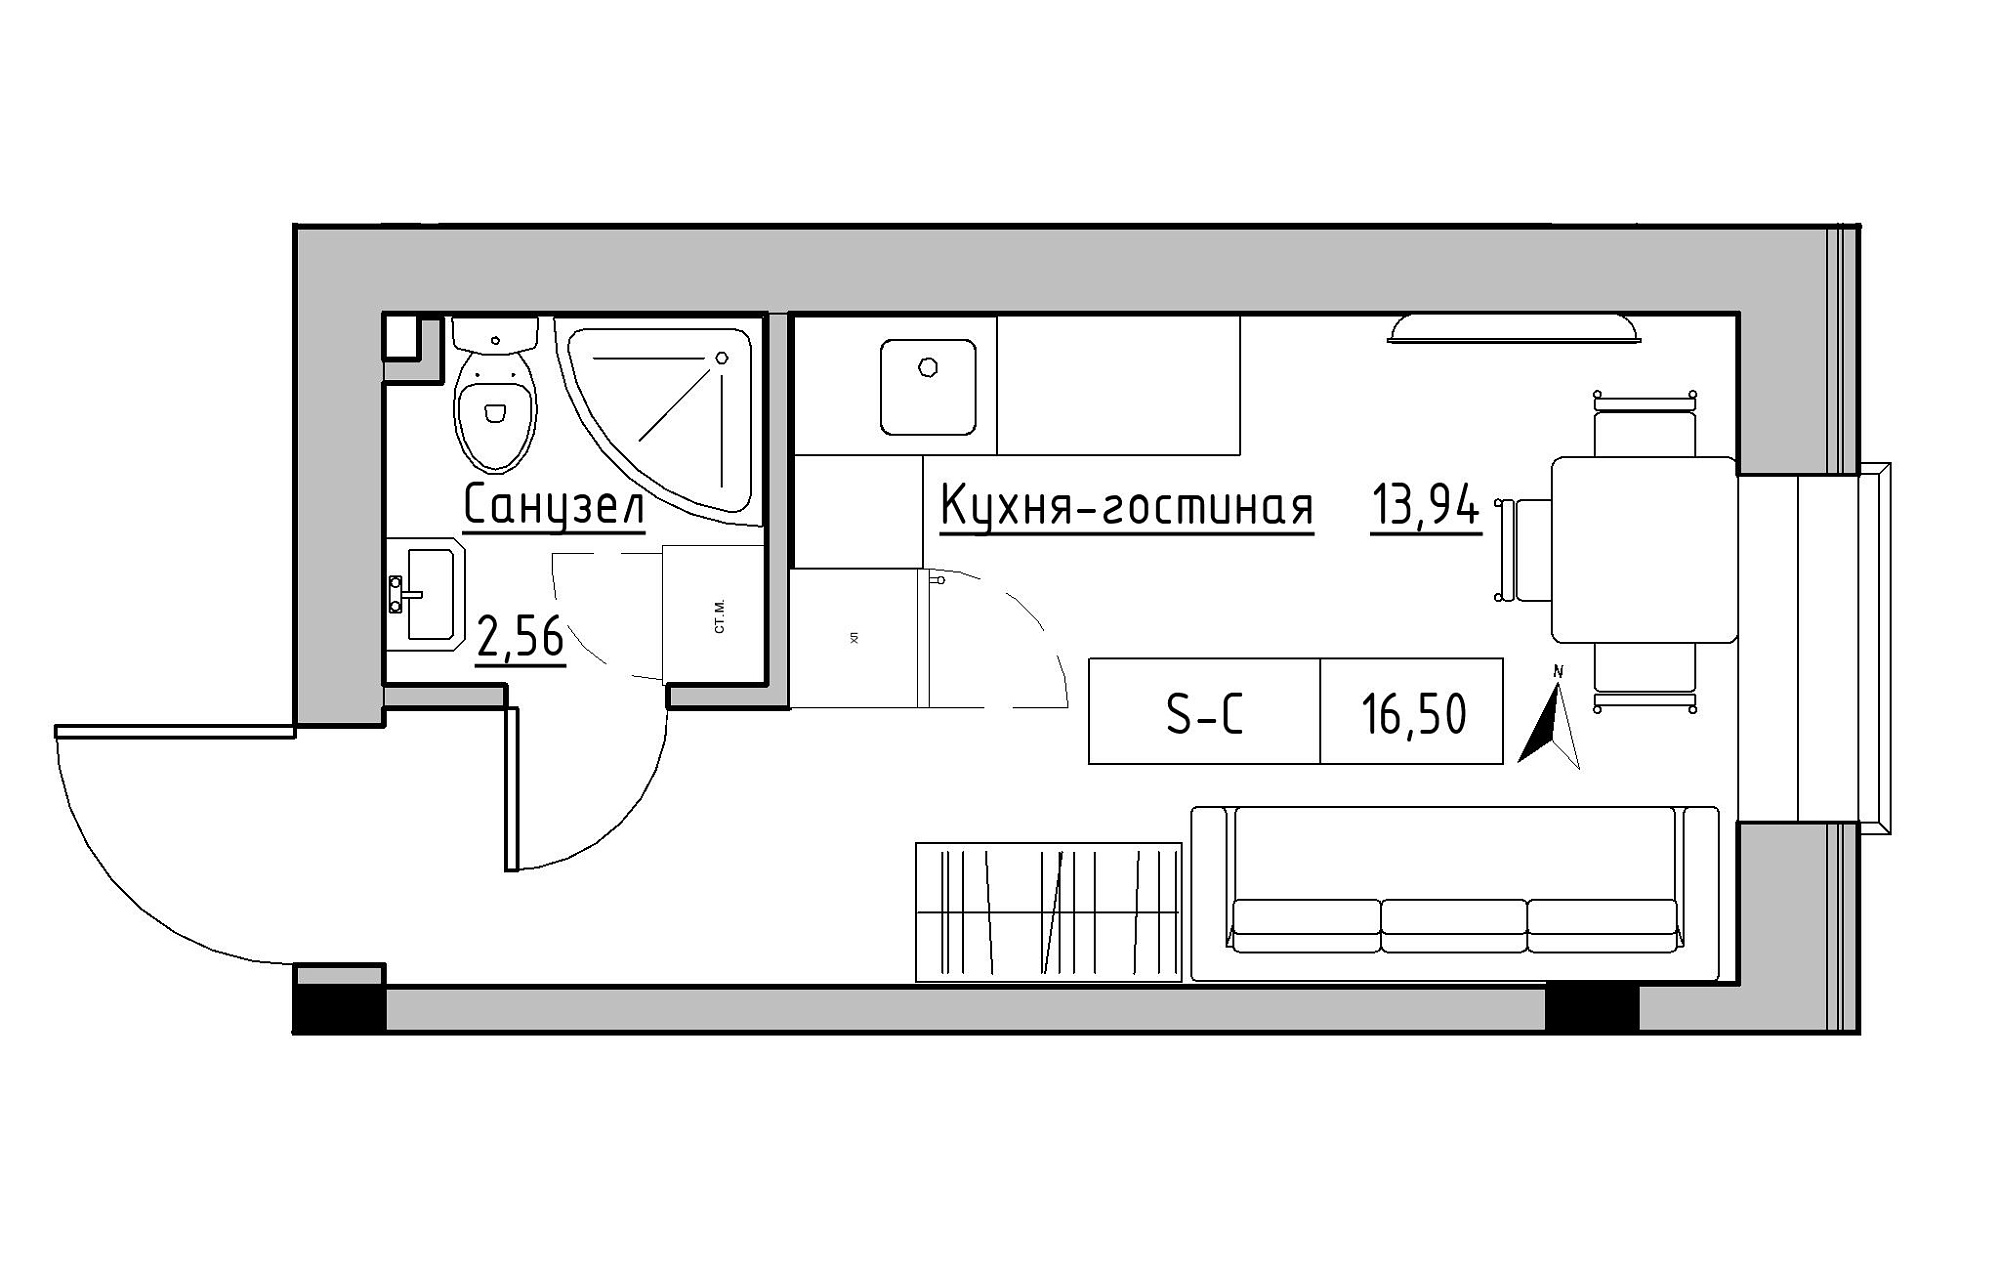 Planning Smart flats area 16.5m2, KS-019-01/0005.